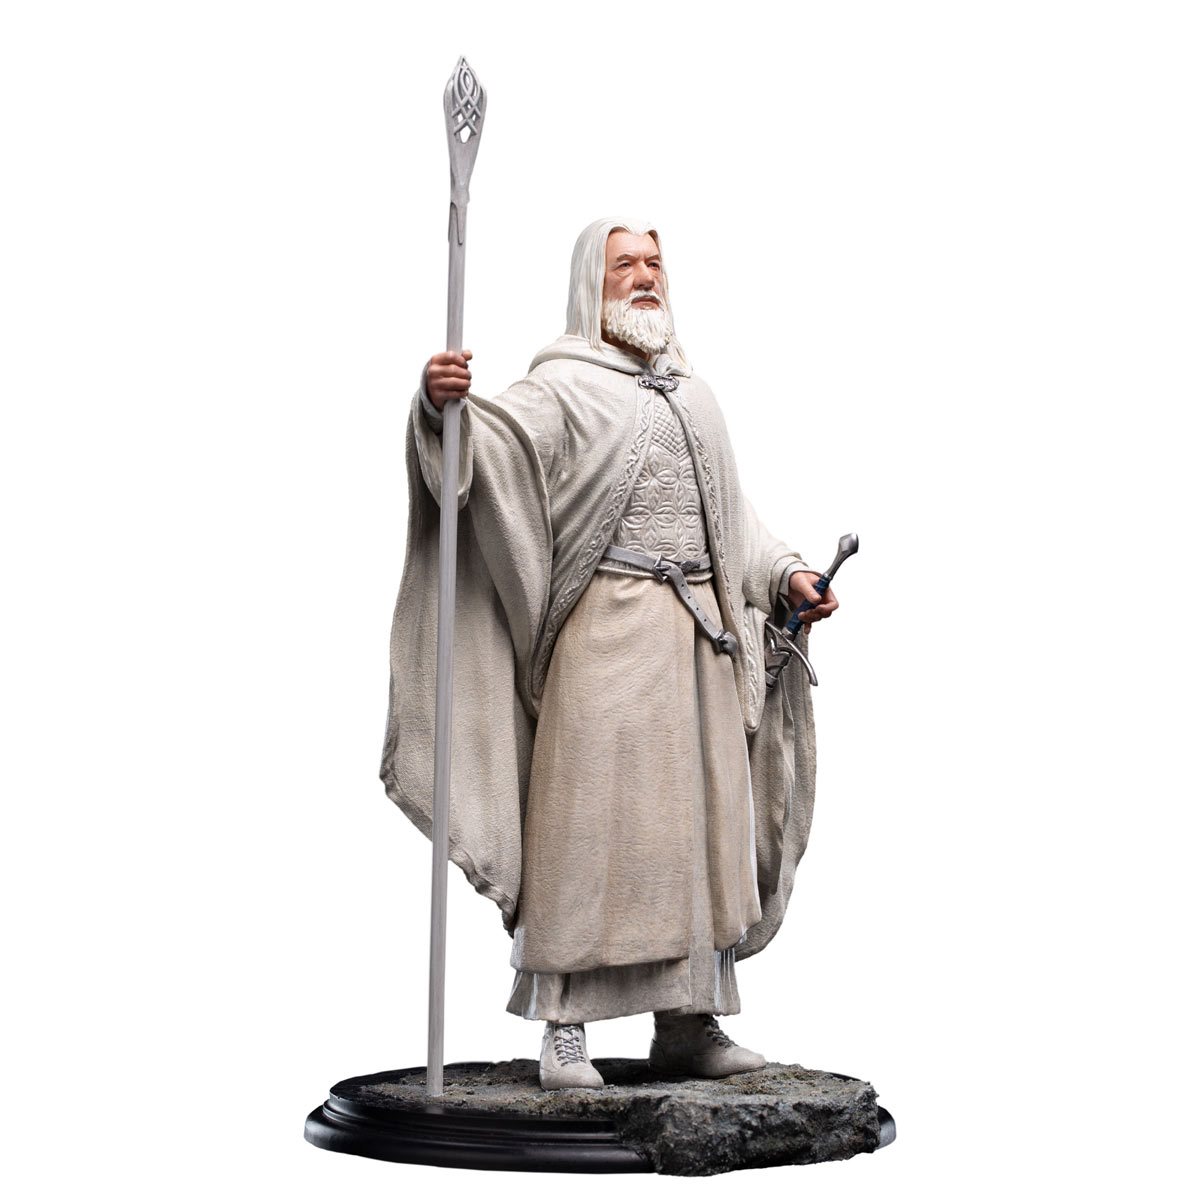 Gollum Weta Workshop Miniature Figure Lord of the Rings Hobbit LOTR (New)